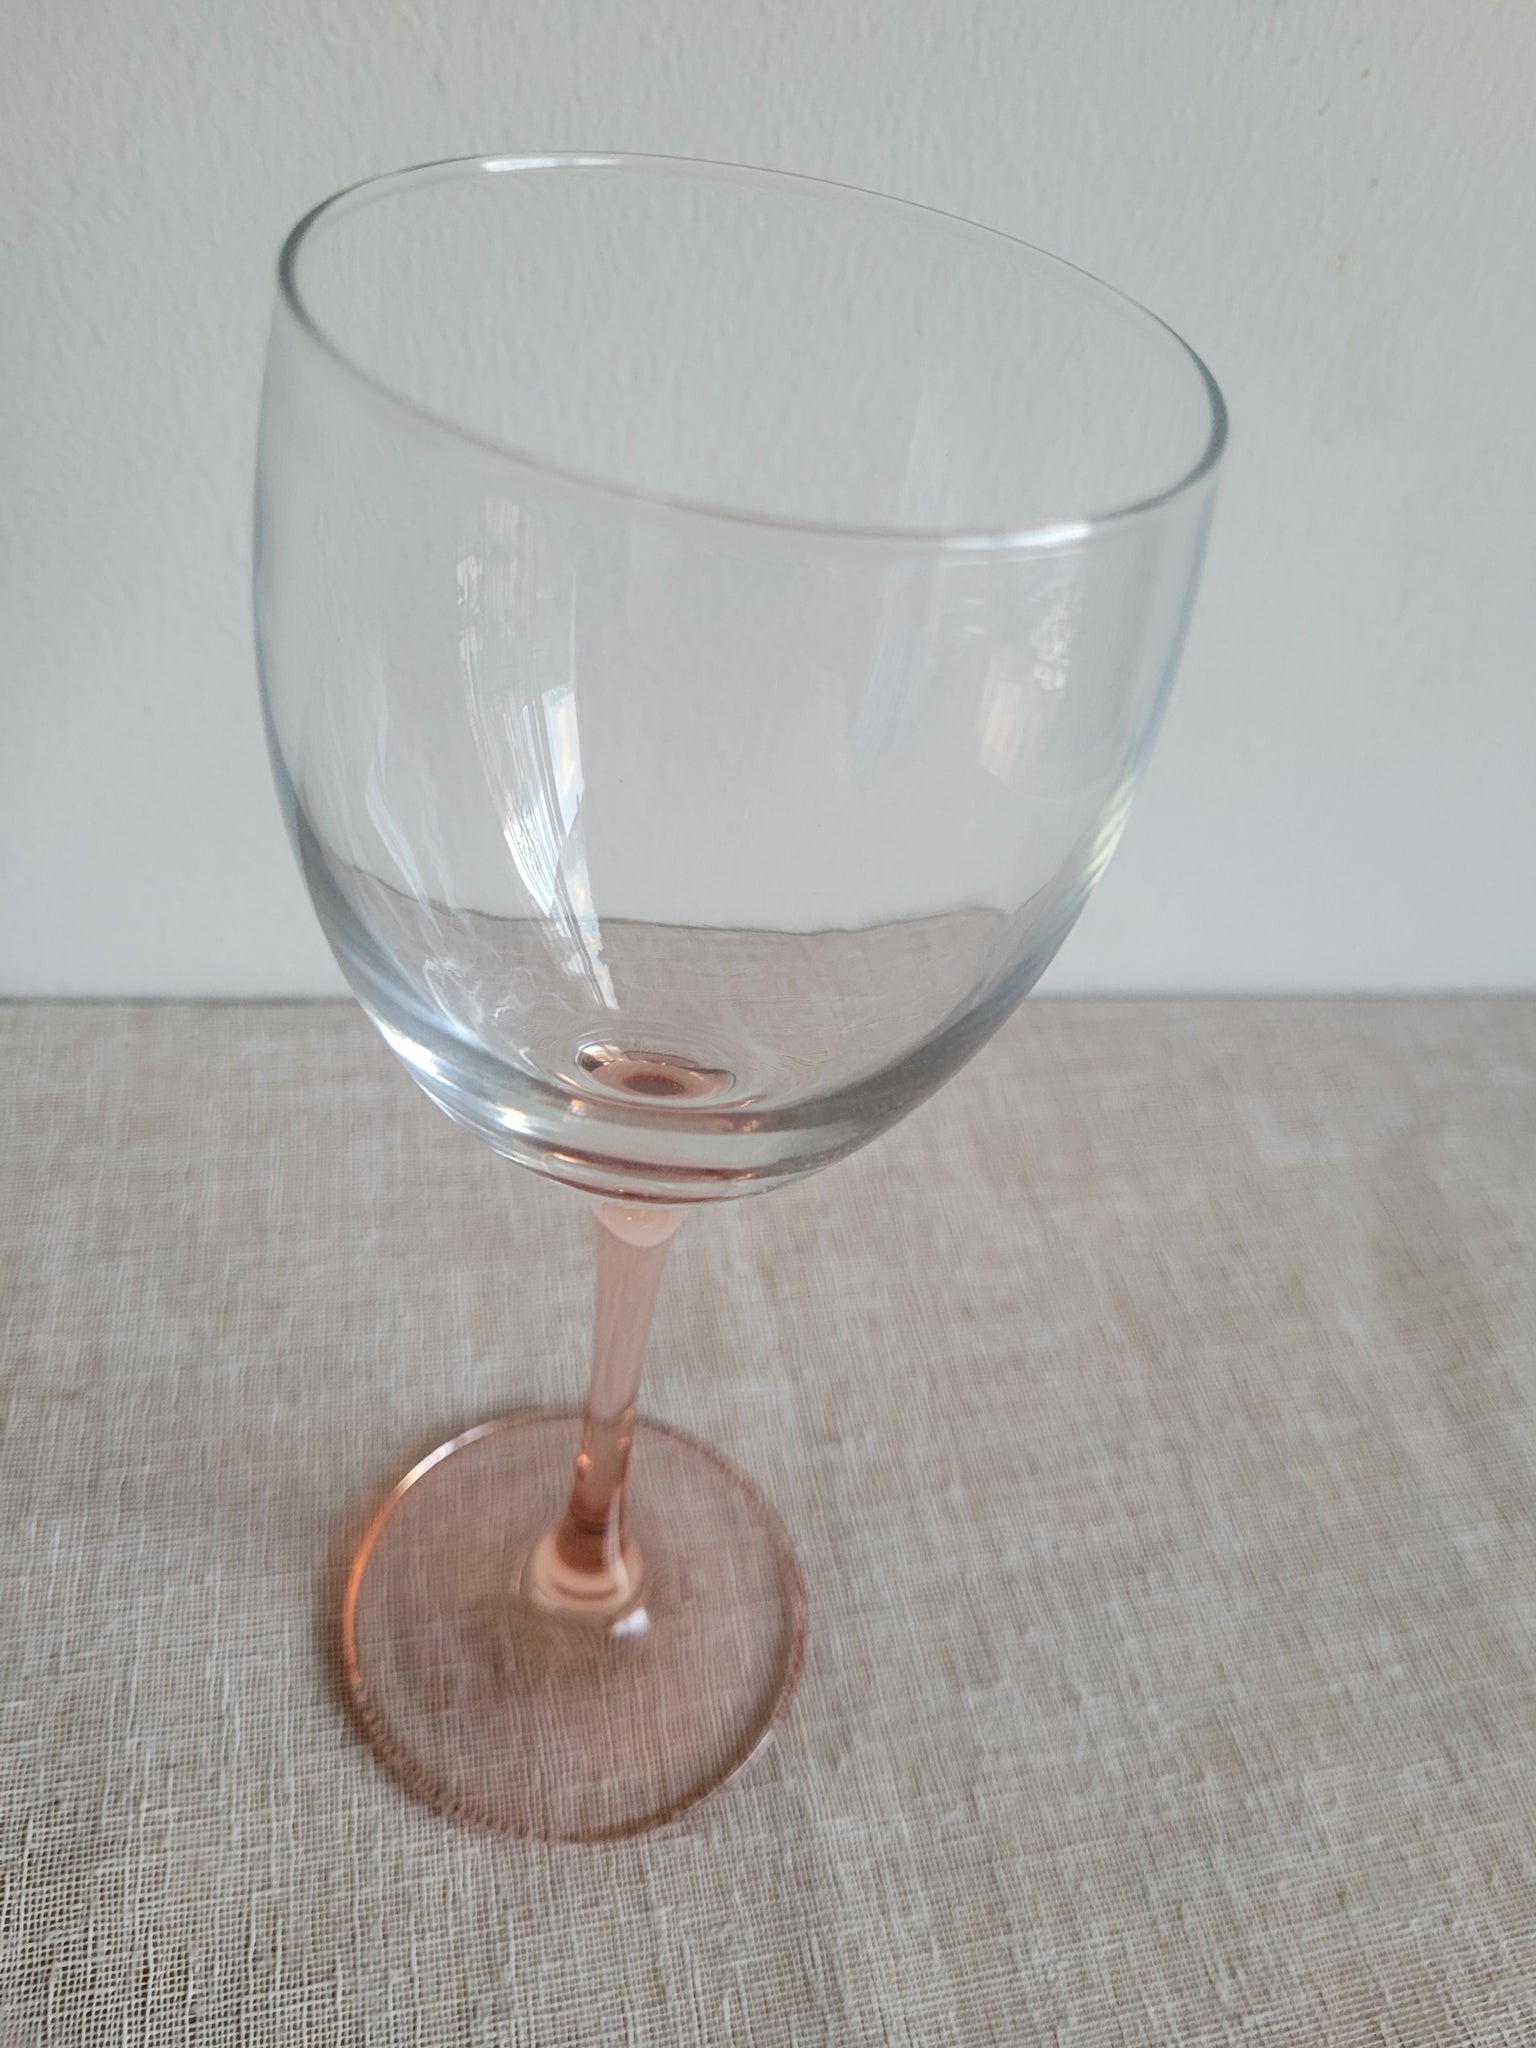 Pink Stem Wine Glasses (set of 2)